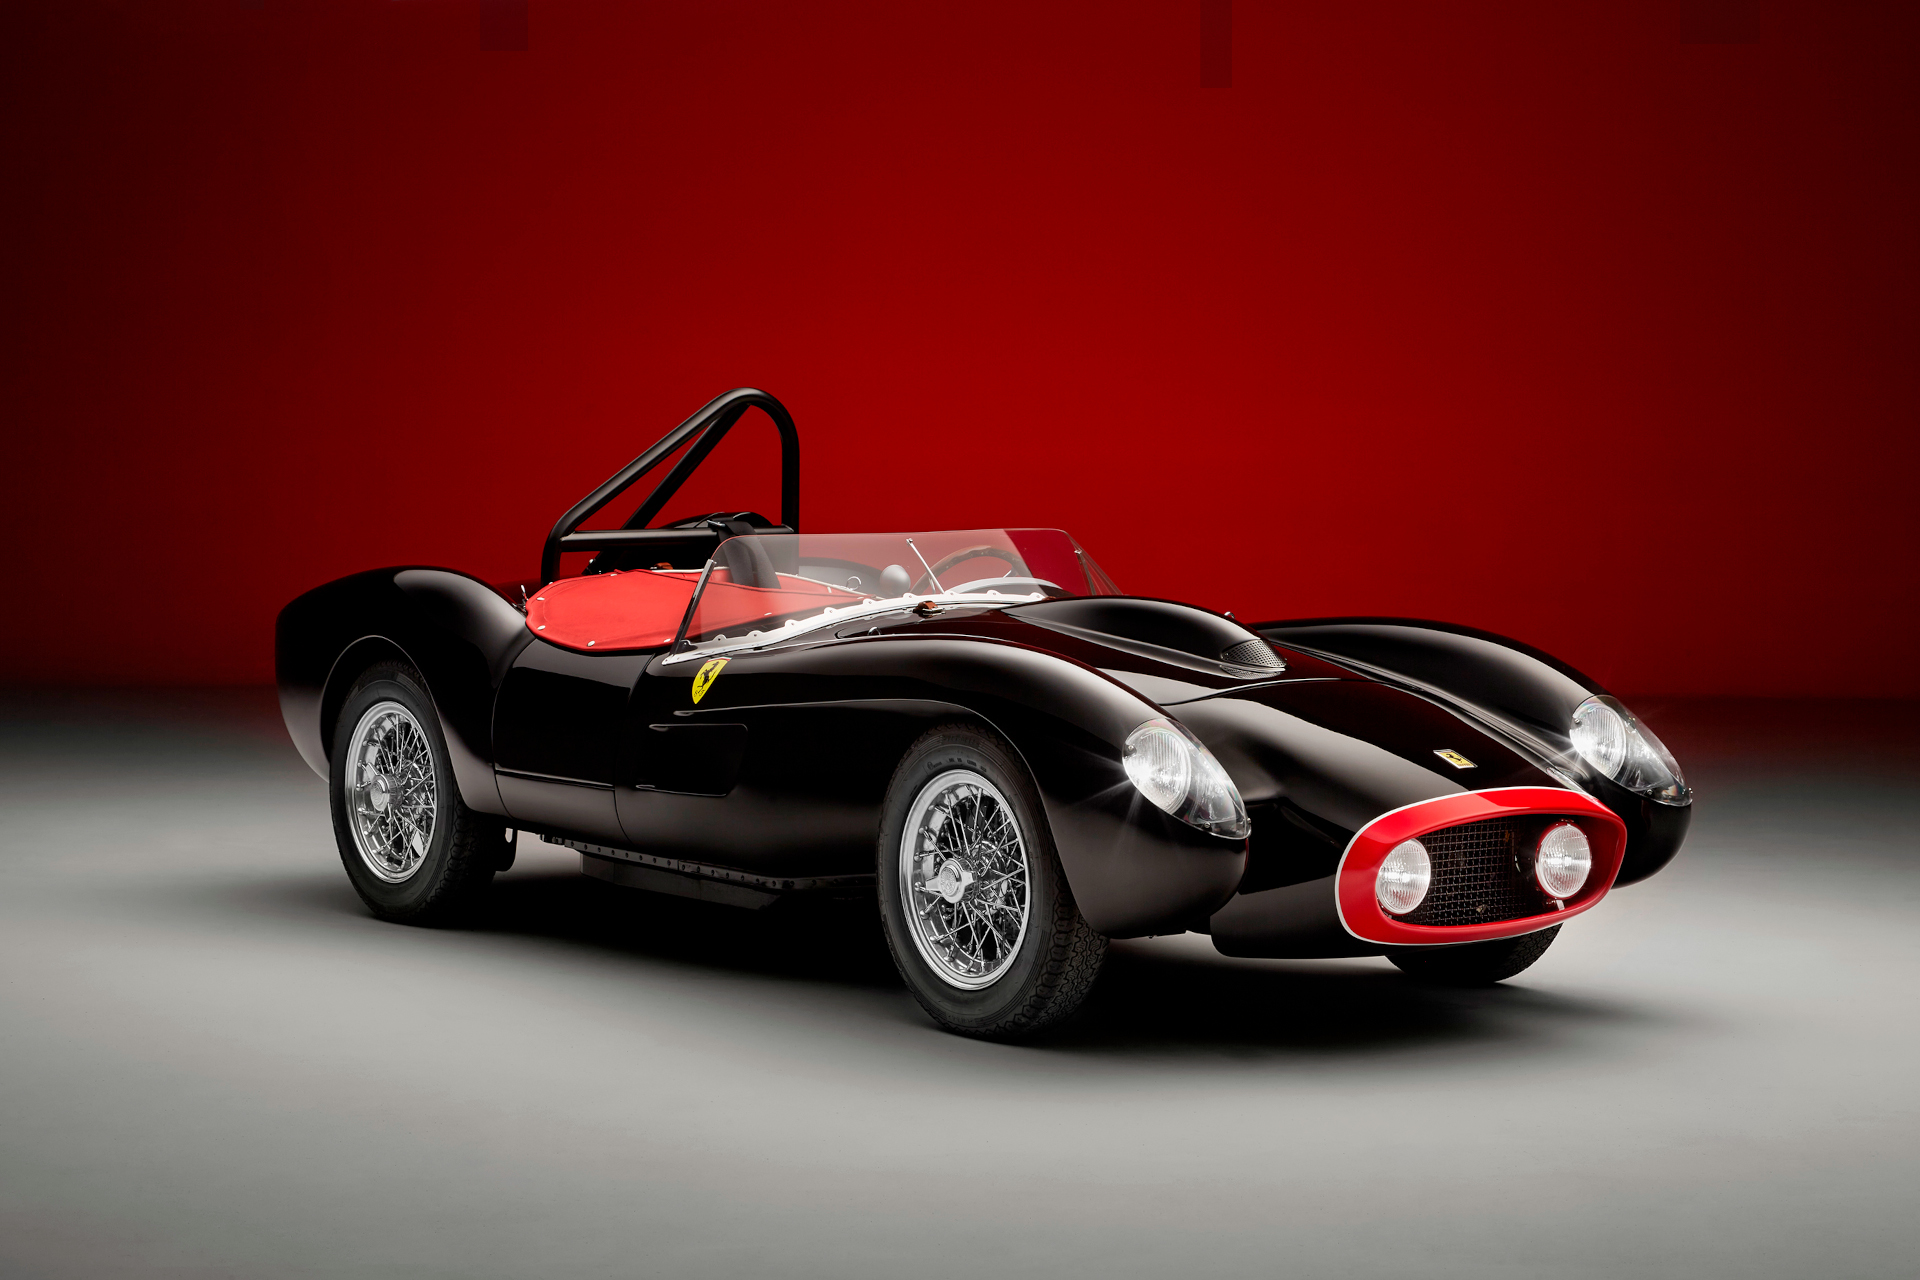 Racing heritage reimagined: The Little Car Company will launch special edition ‘Pacco Gara’ Ferrari Testa Rossa J